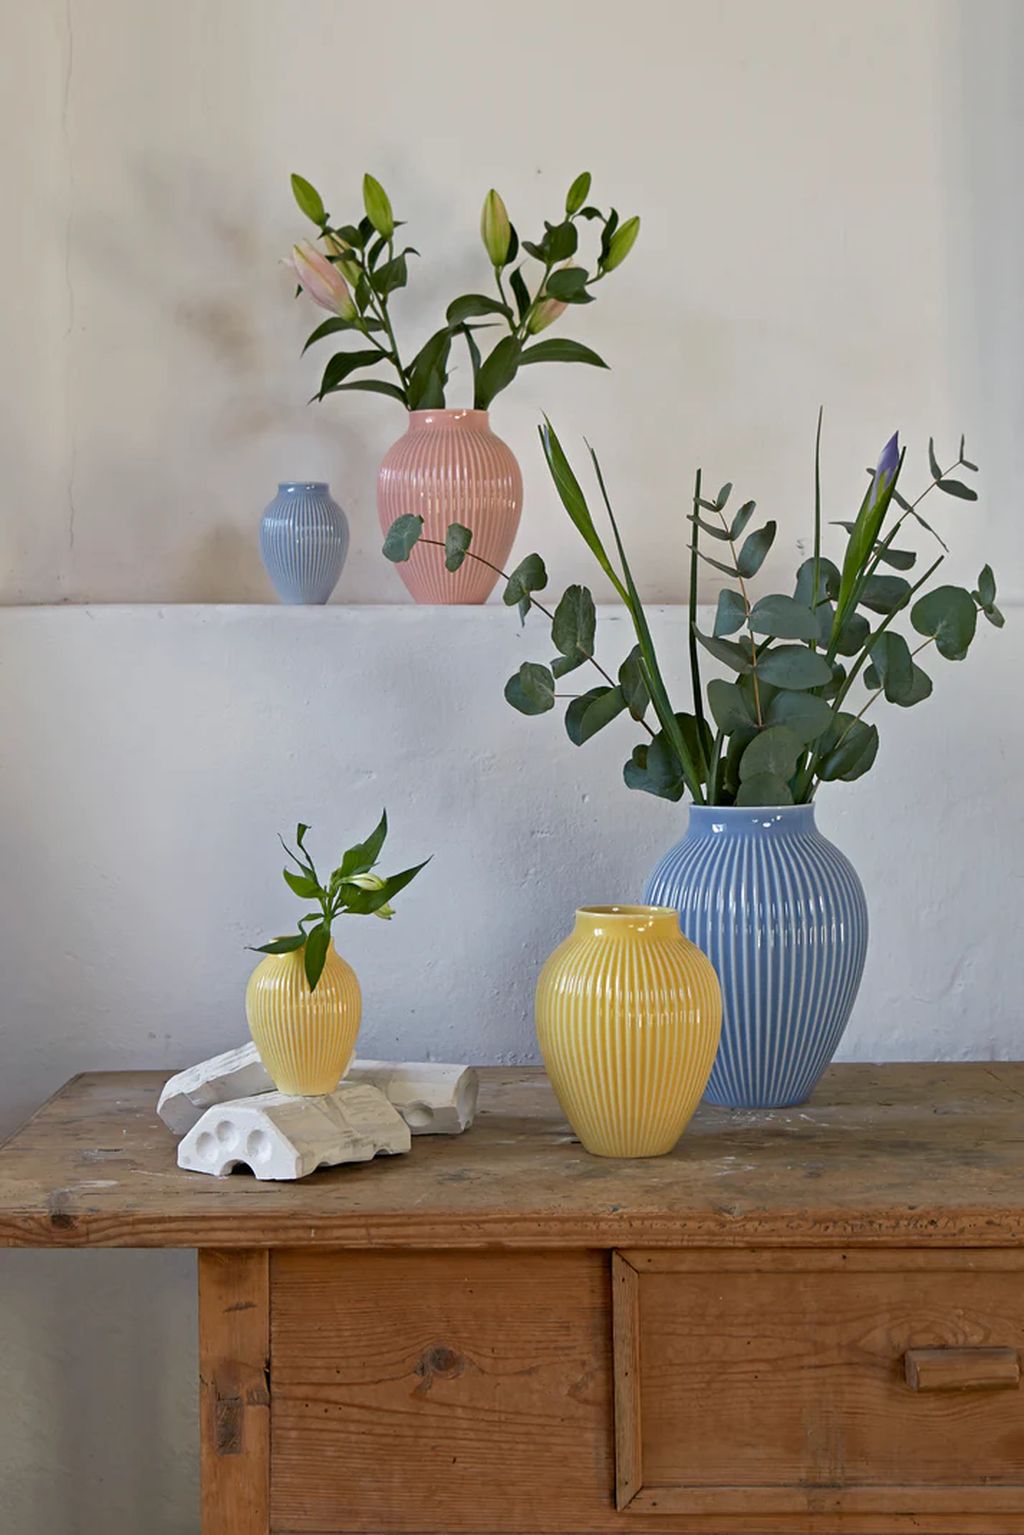 Knabstrup Keramik -Vase mit Rillen H 27 cm, Gelb